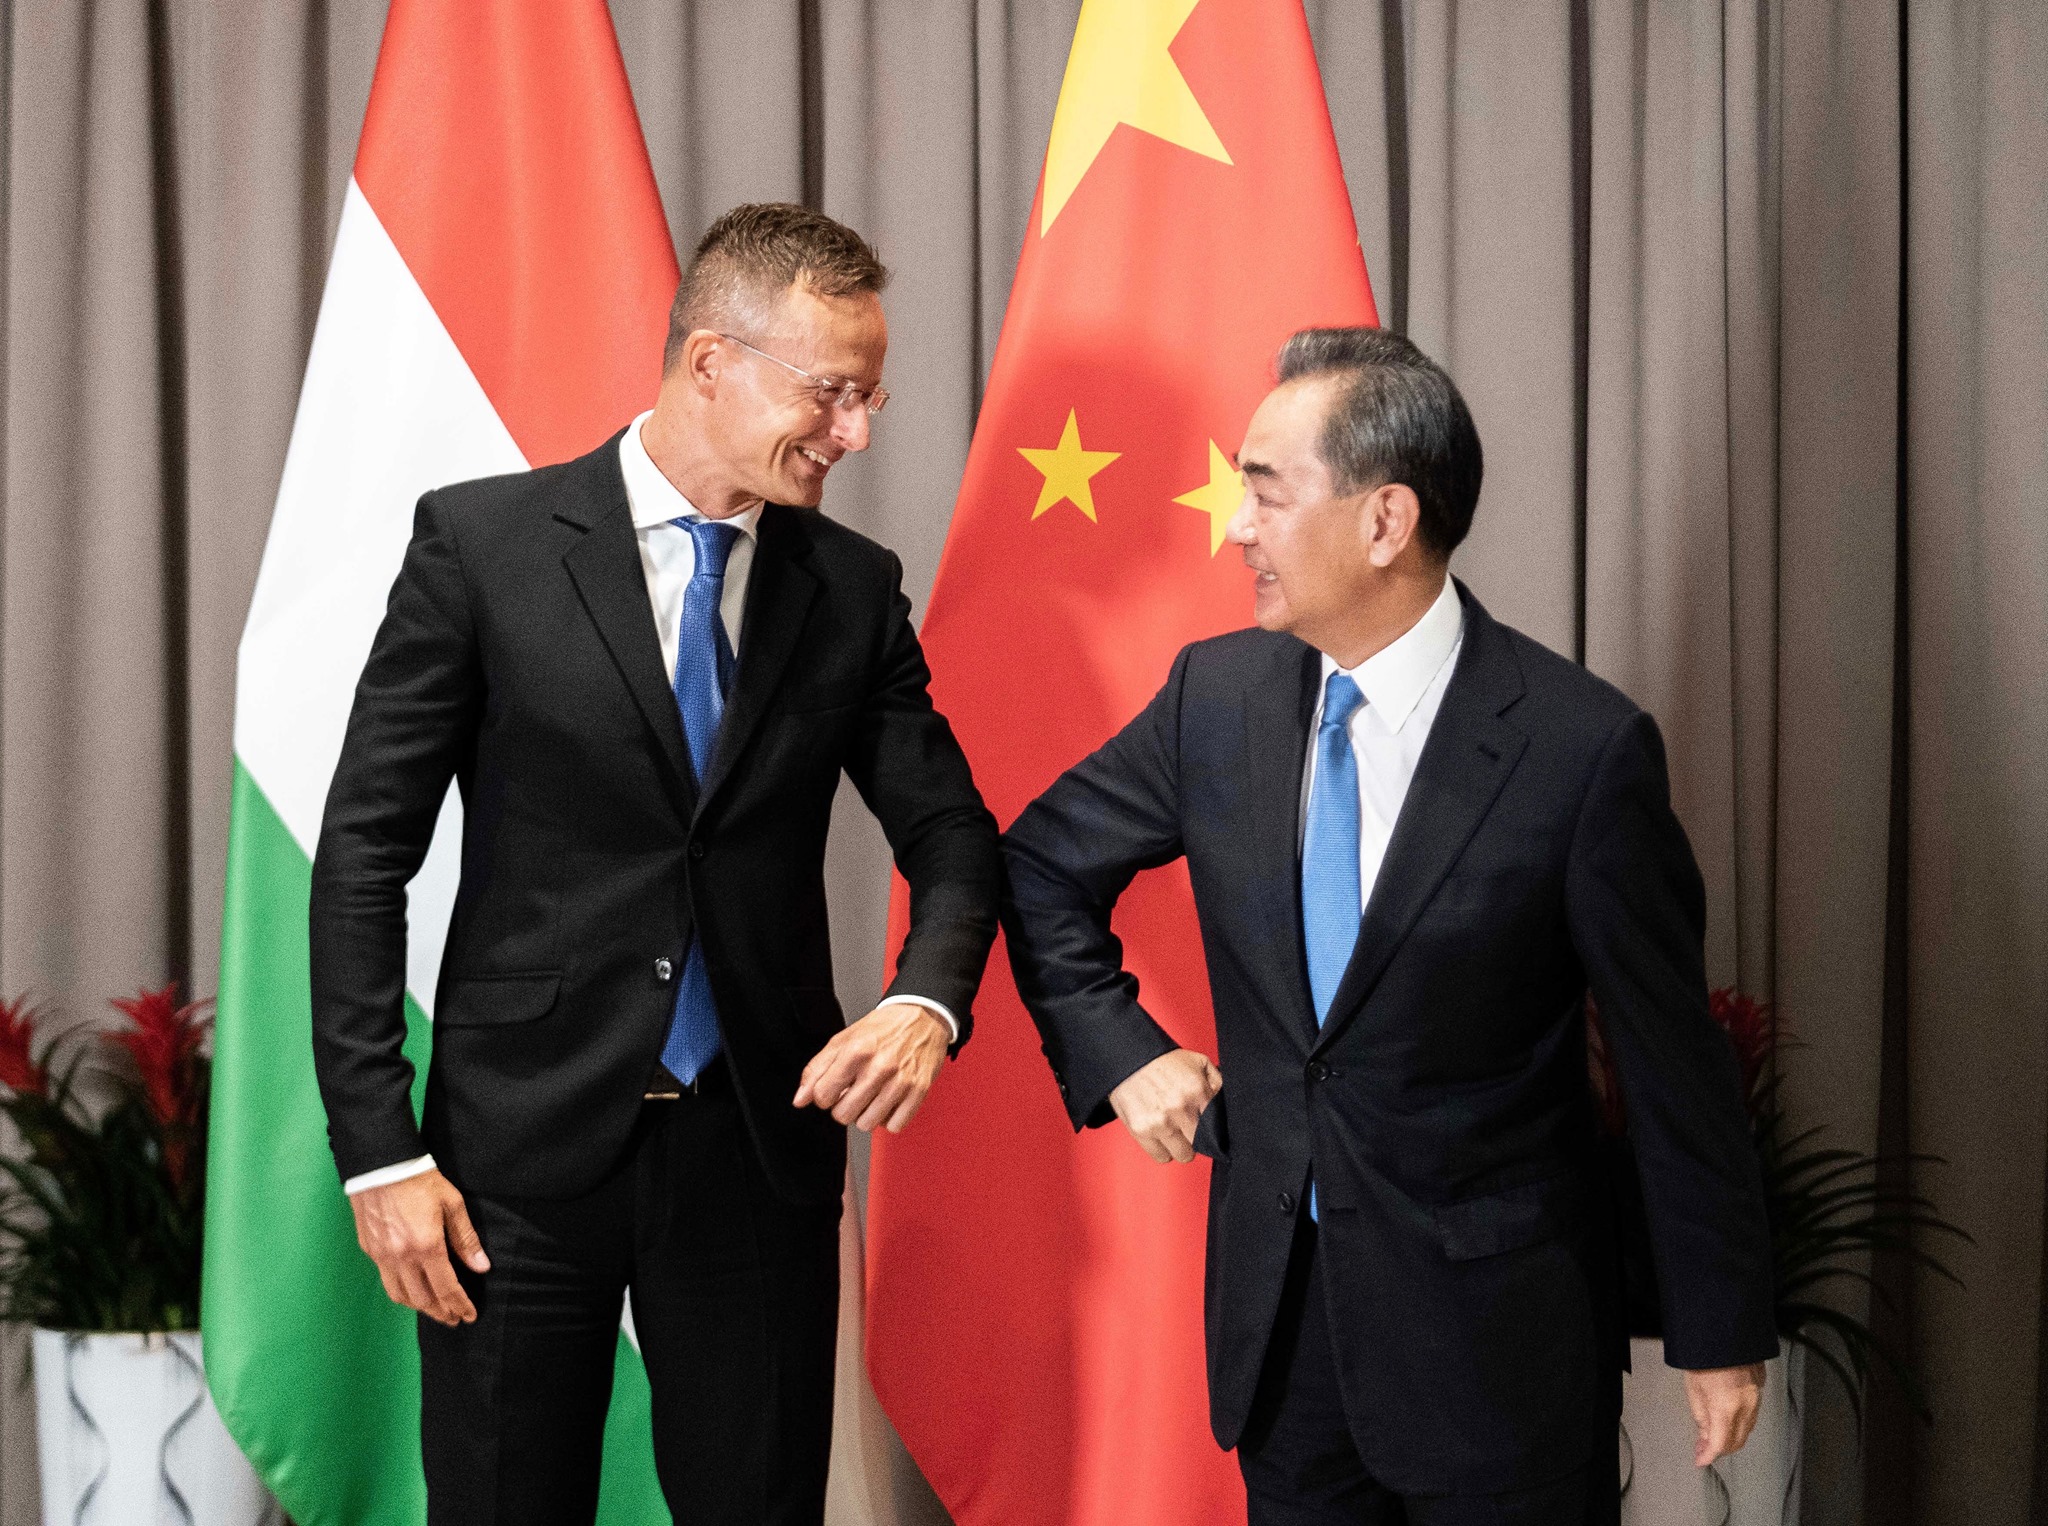 Szijjártó: China and Hungary Work to Restart Economic Cooperation